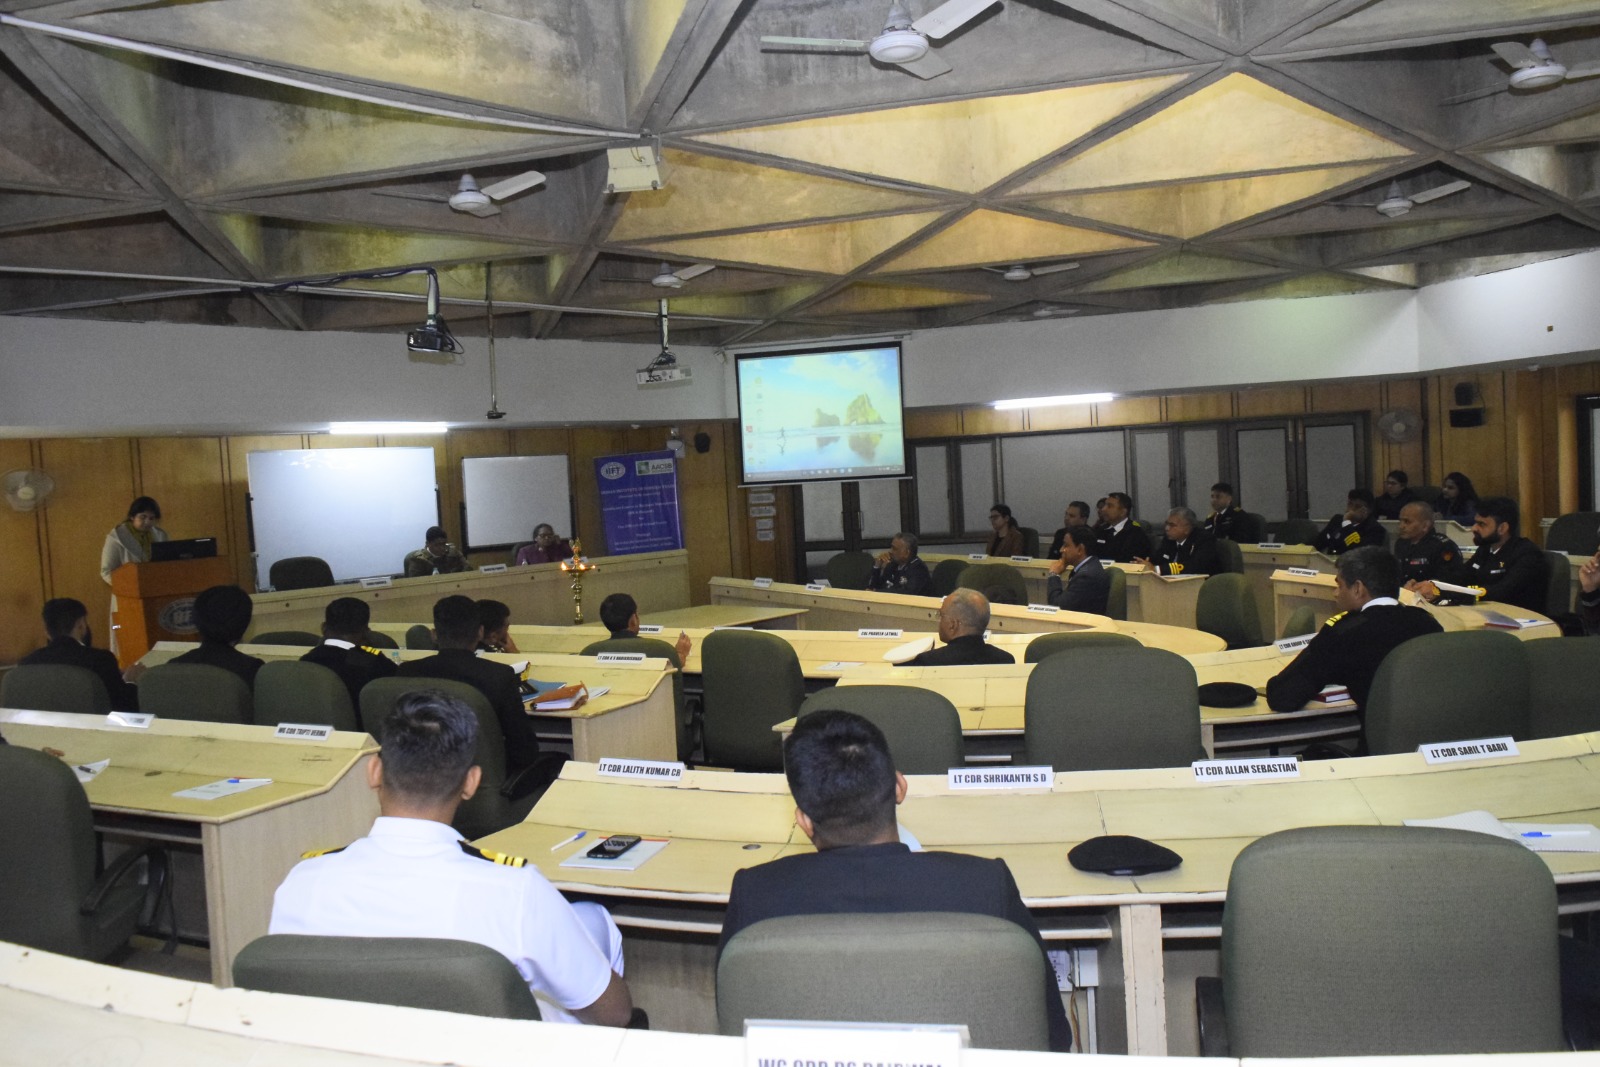 IIM Kashipur,IIFT, NIIE, XLRI: Four Top BSchools Hiring Faculty Posts Including Asst. Professors